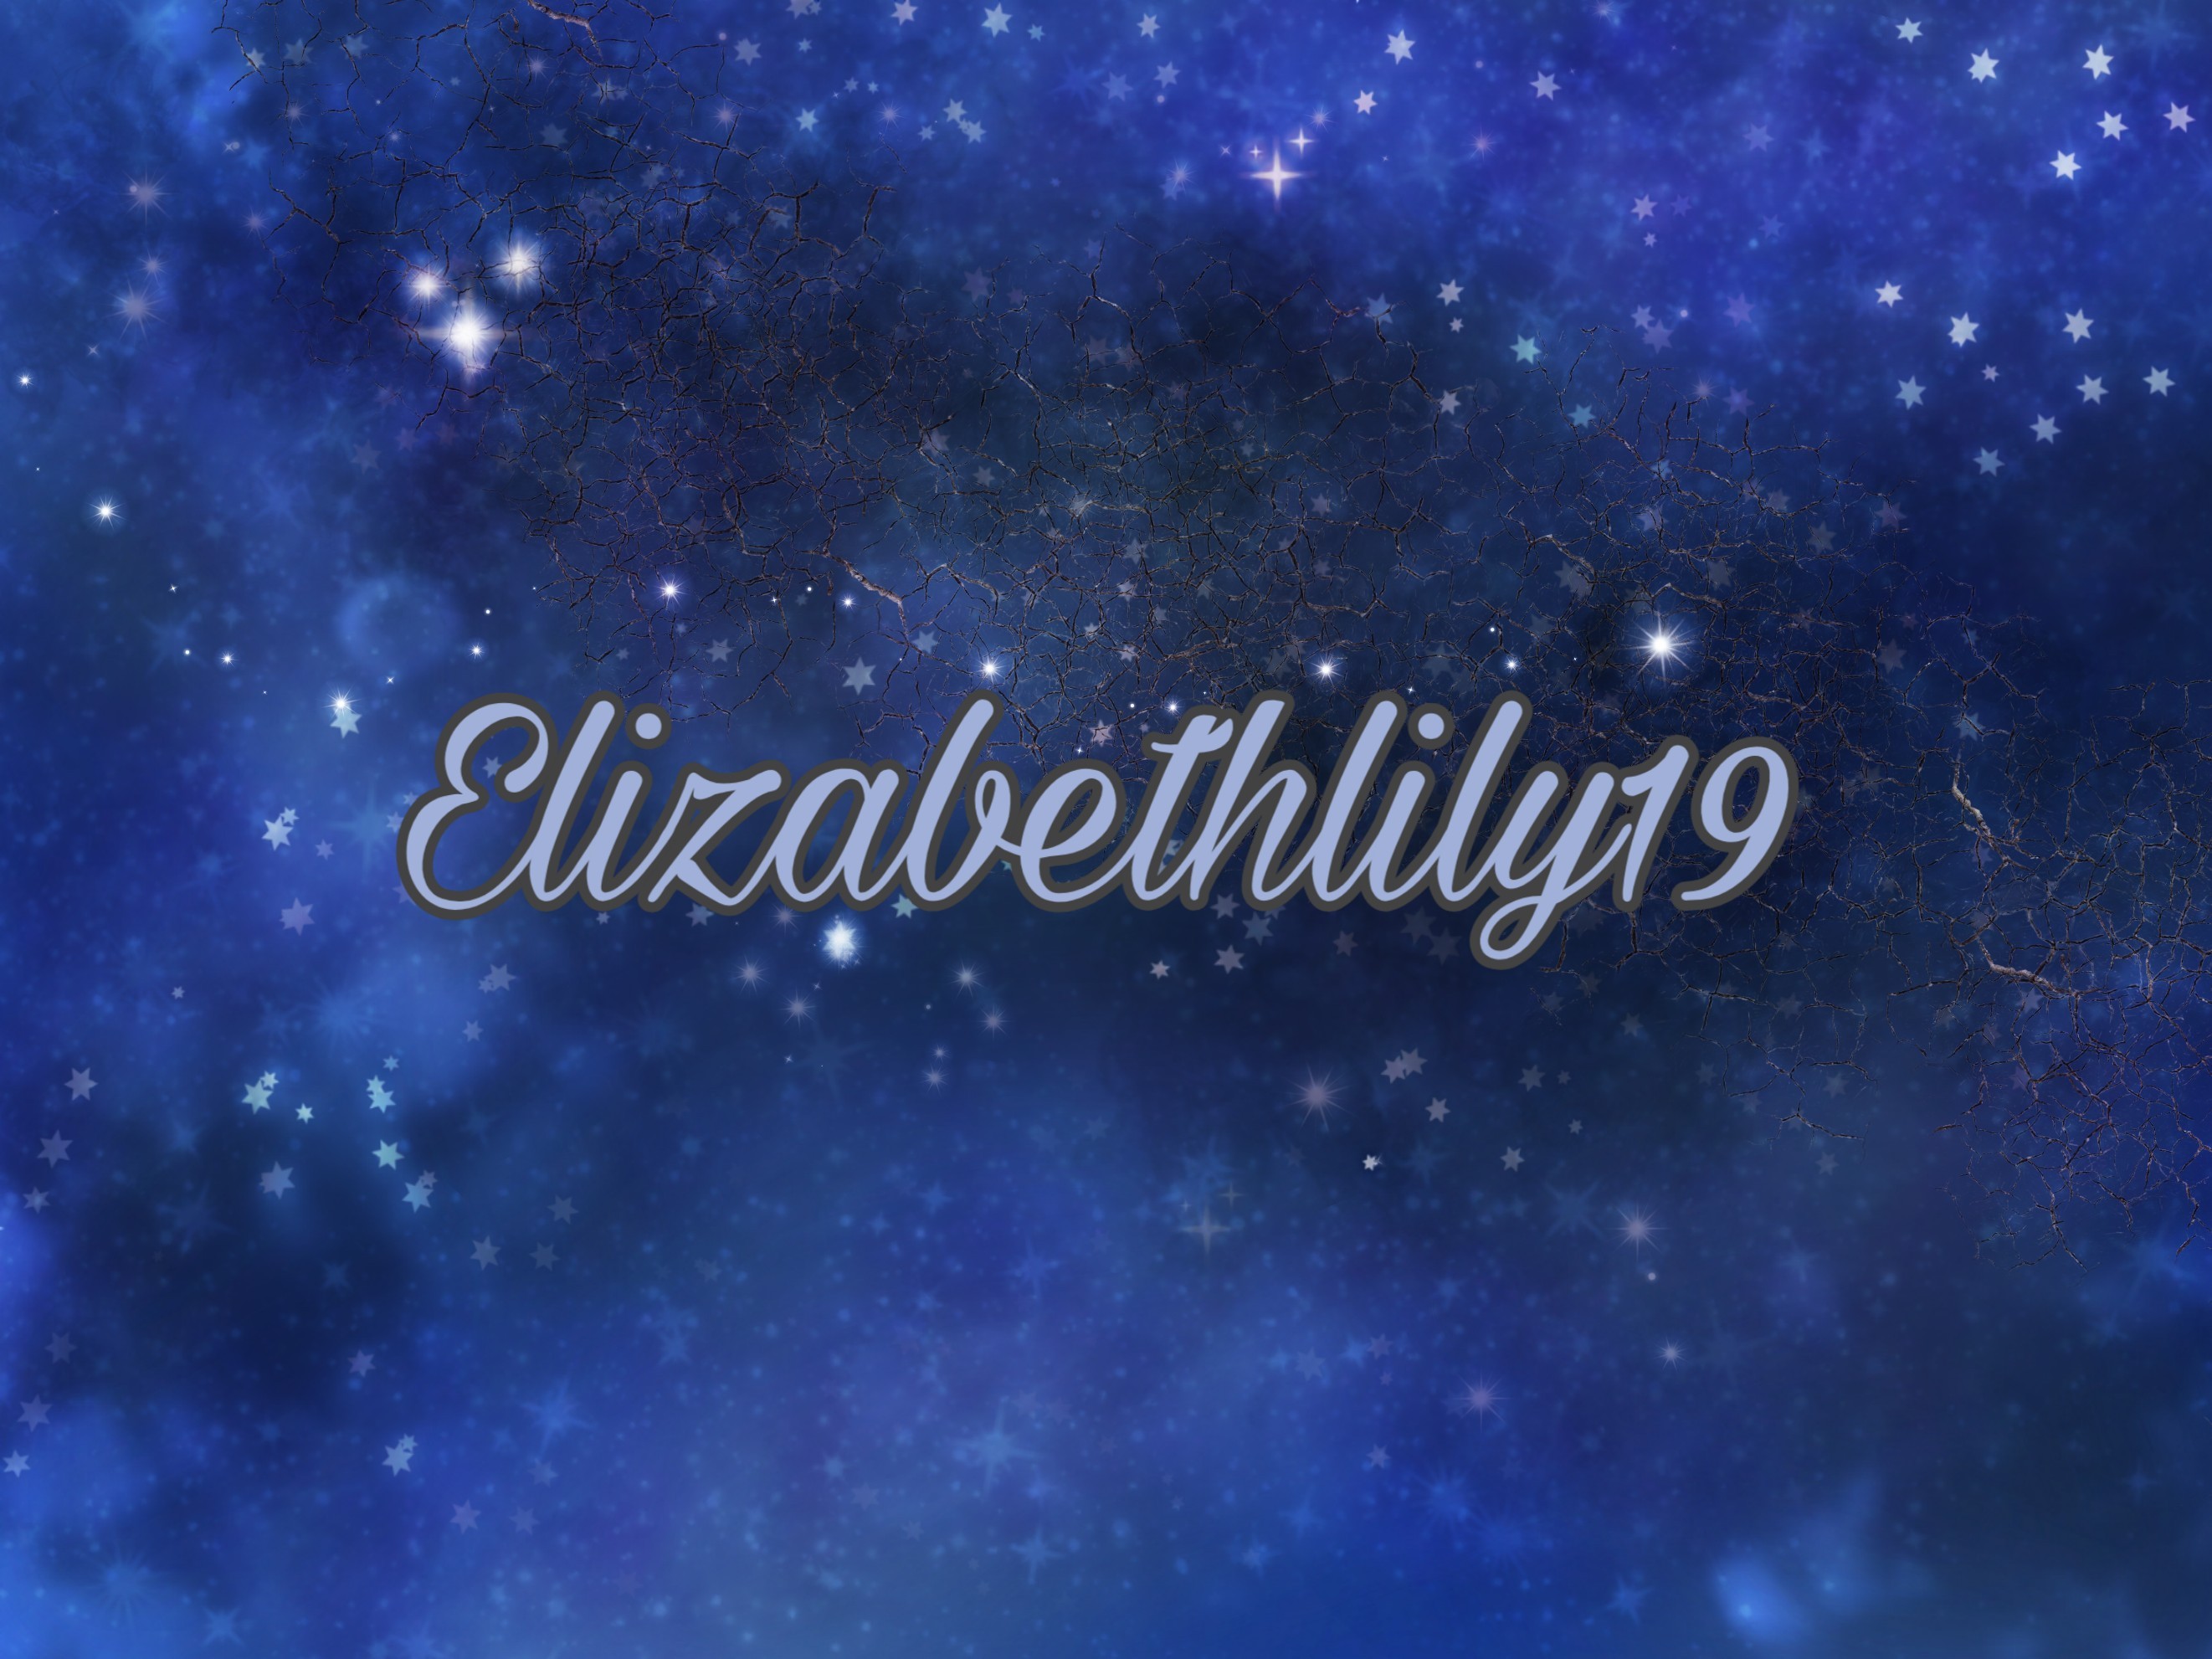 See Elizabeth ✨ profile